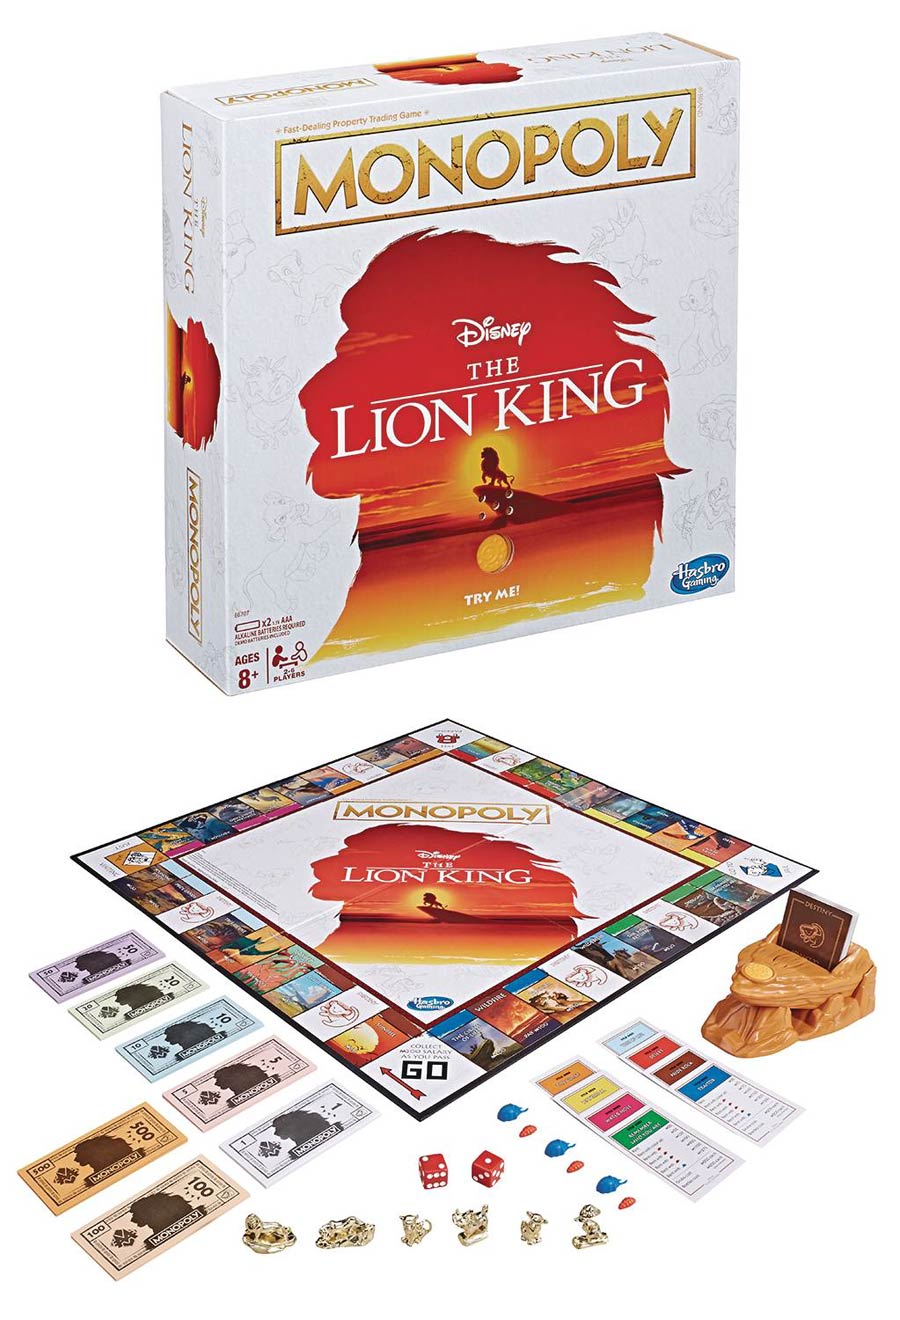 Monopoly Disney Lion King Edition Game